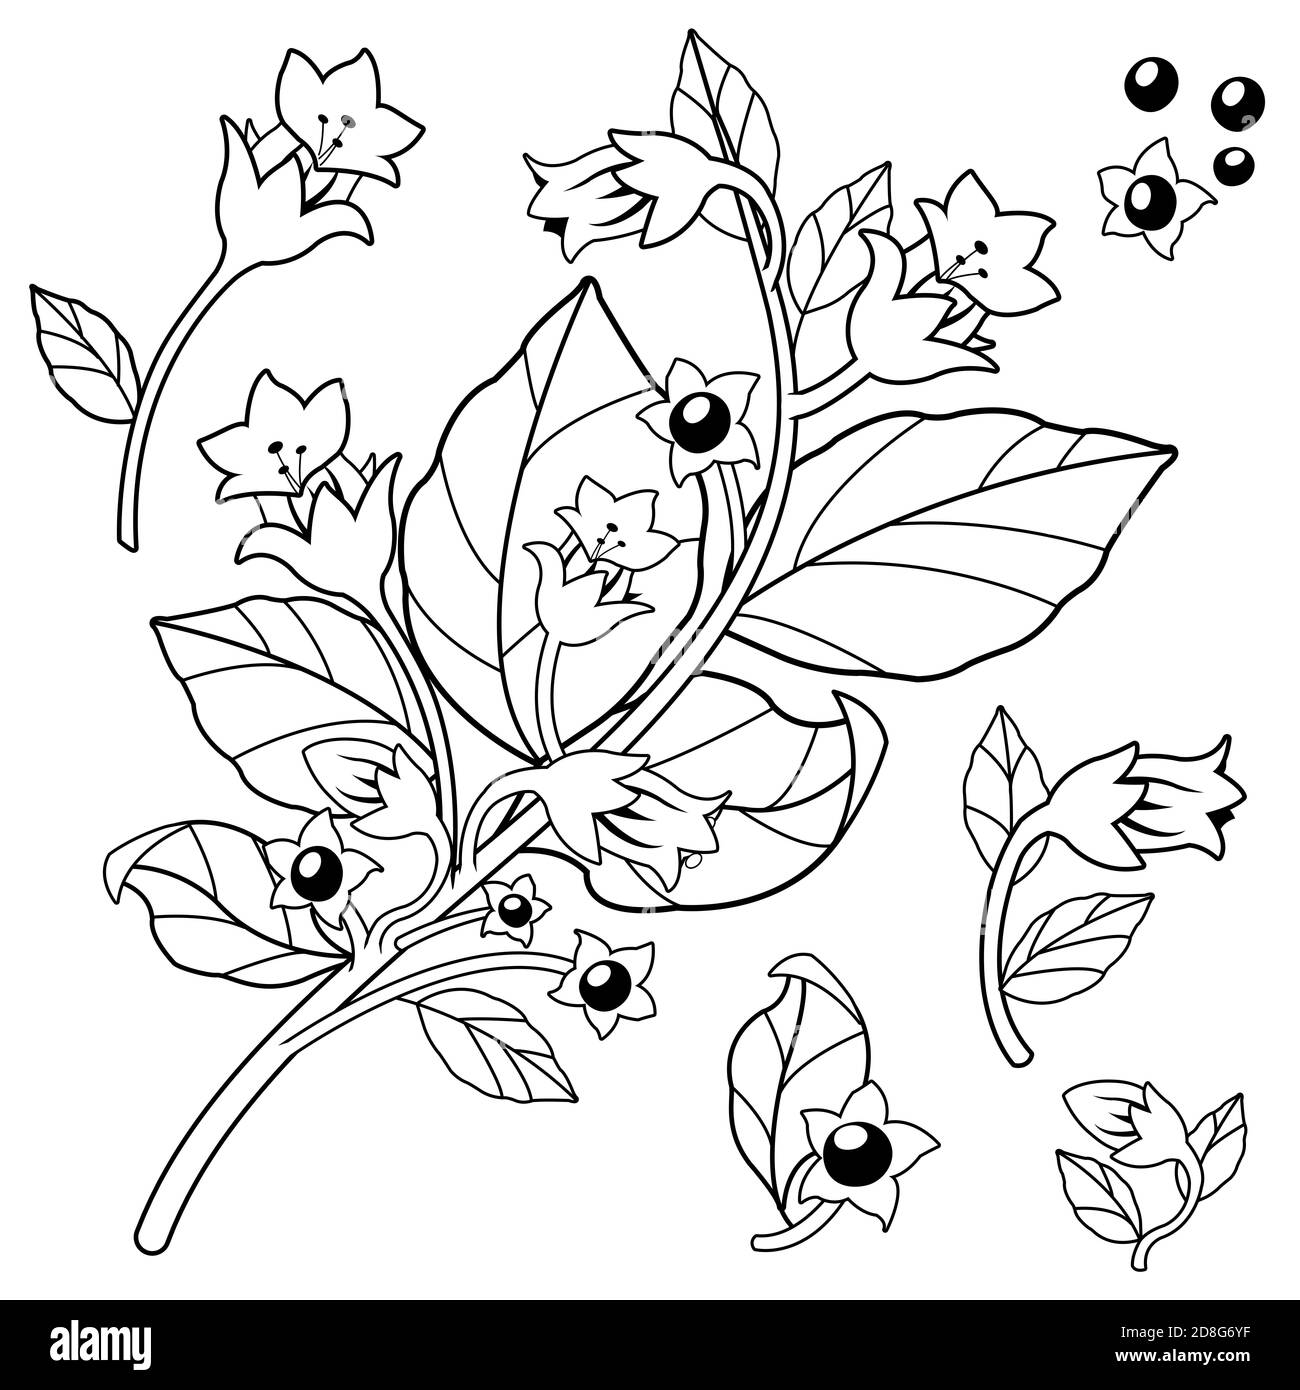 Belladonna plant. Black and white illustration Stock Photo